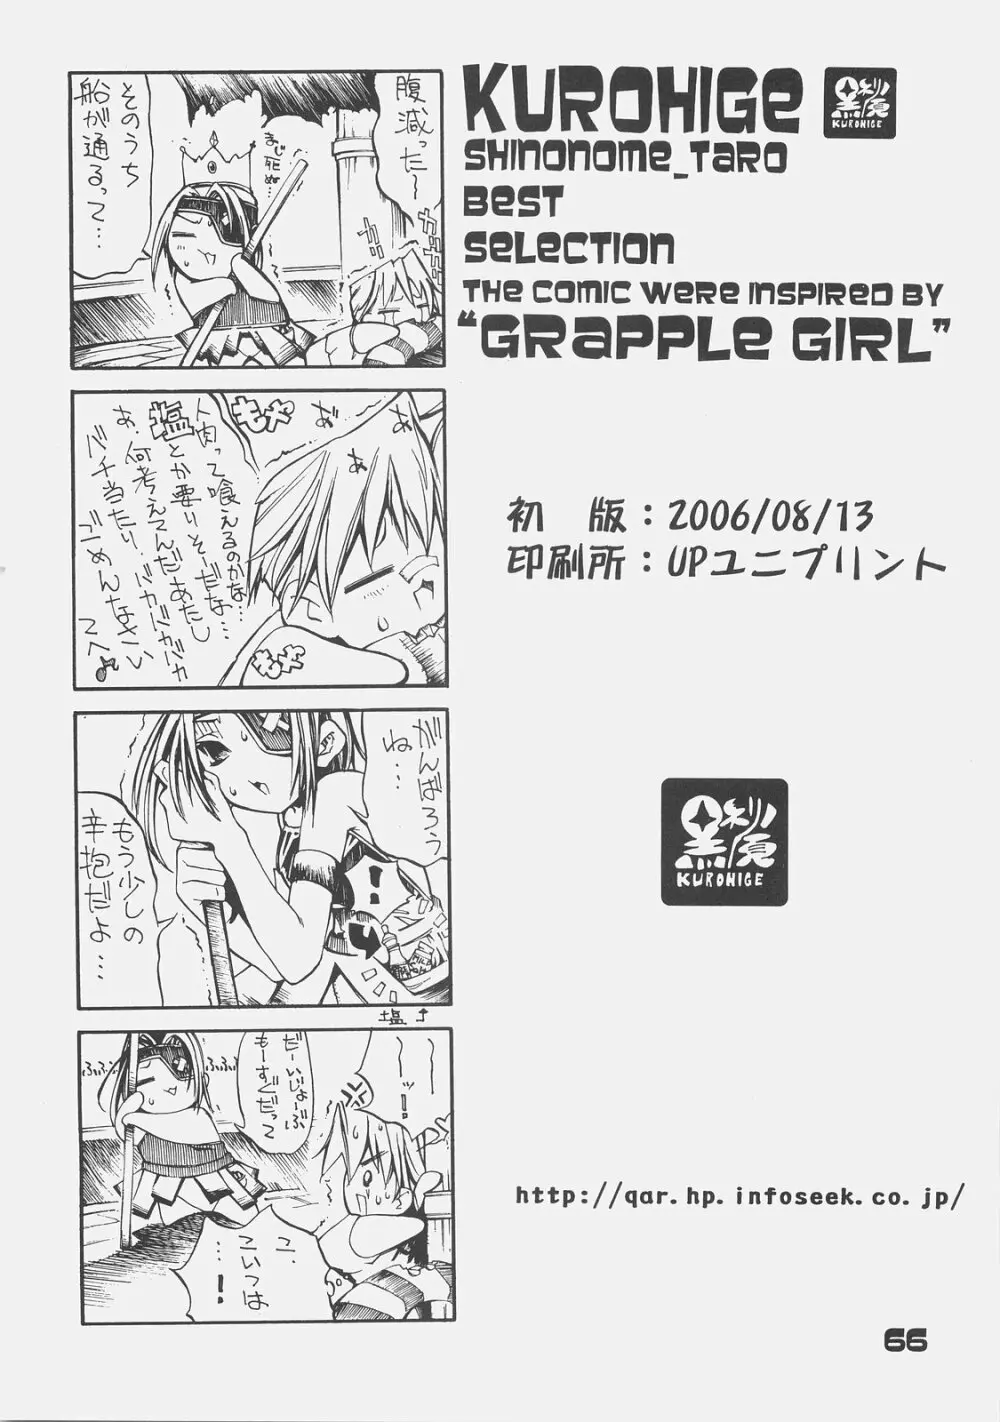 KUROHIGE SHINONOME TARO BEST SELECTION GRAPPLE GIRL 65ページ